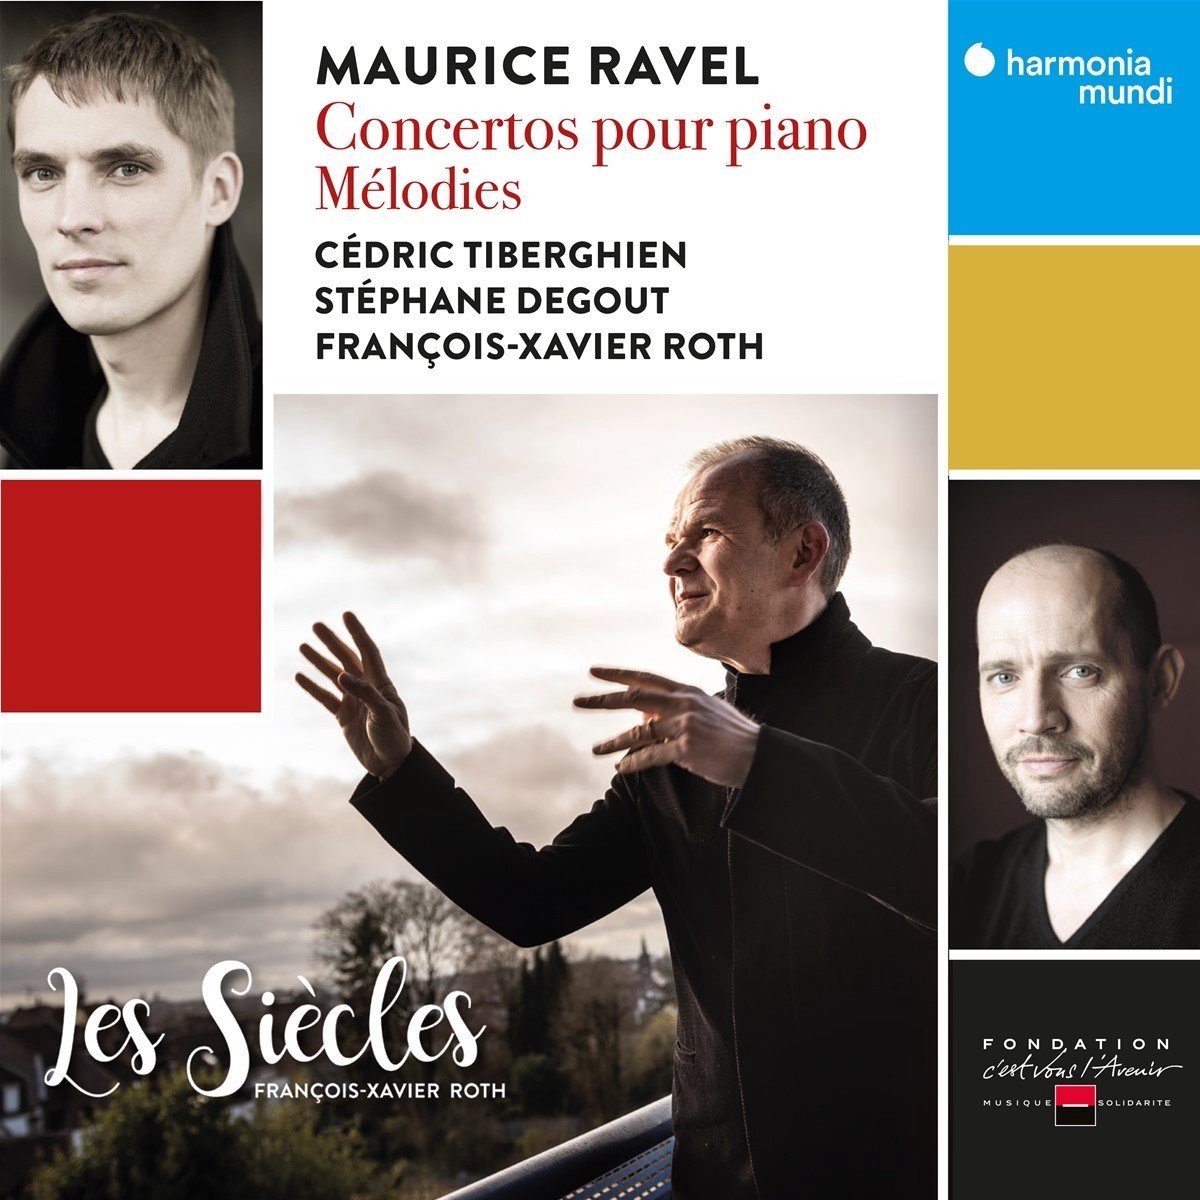 Ravel: Concertos pour piano. Melodies | Maurice Ravel, Cedric Tiberghien, Francois-Xavier Roth